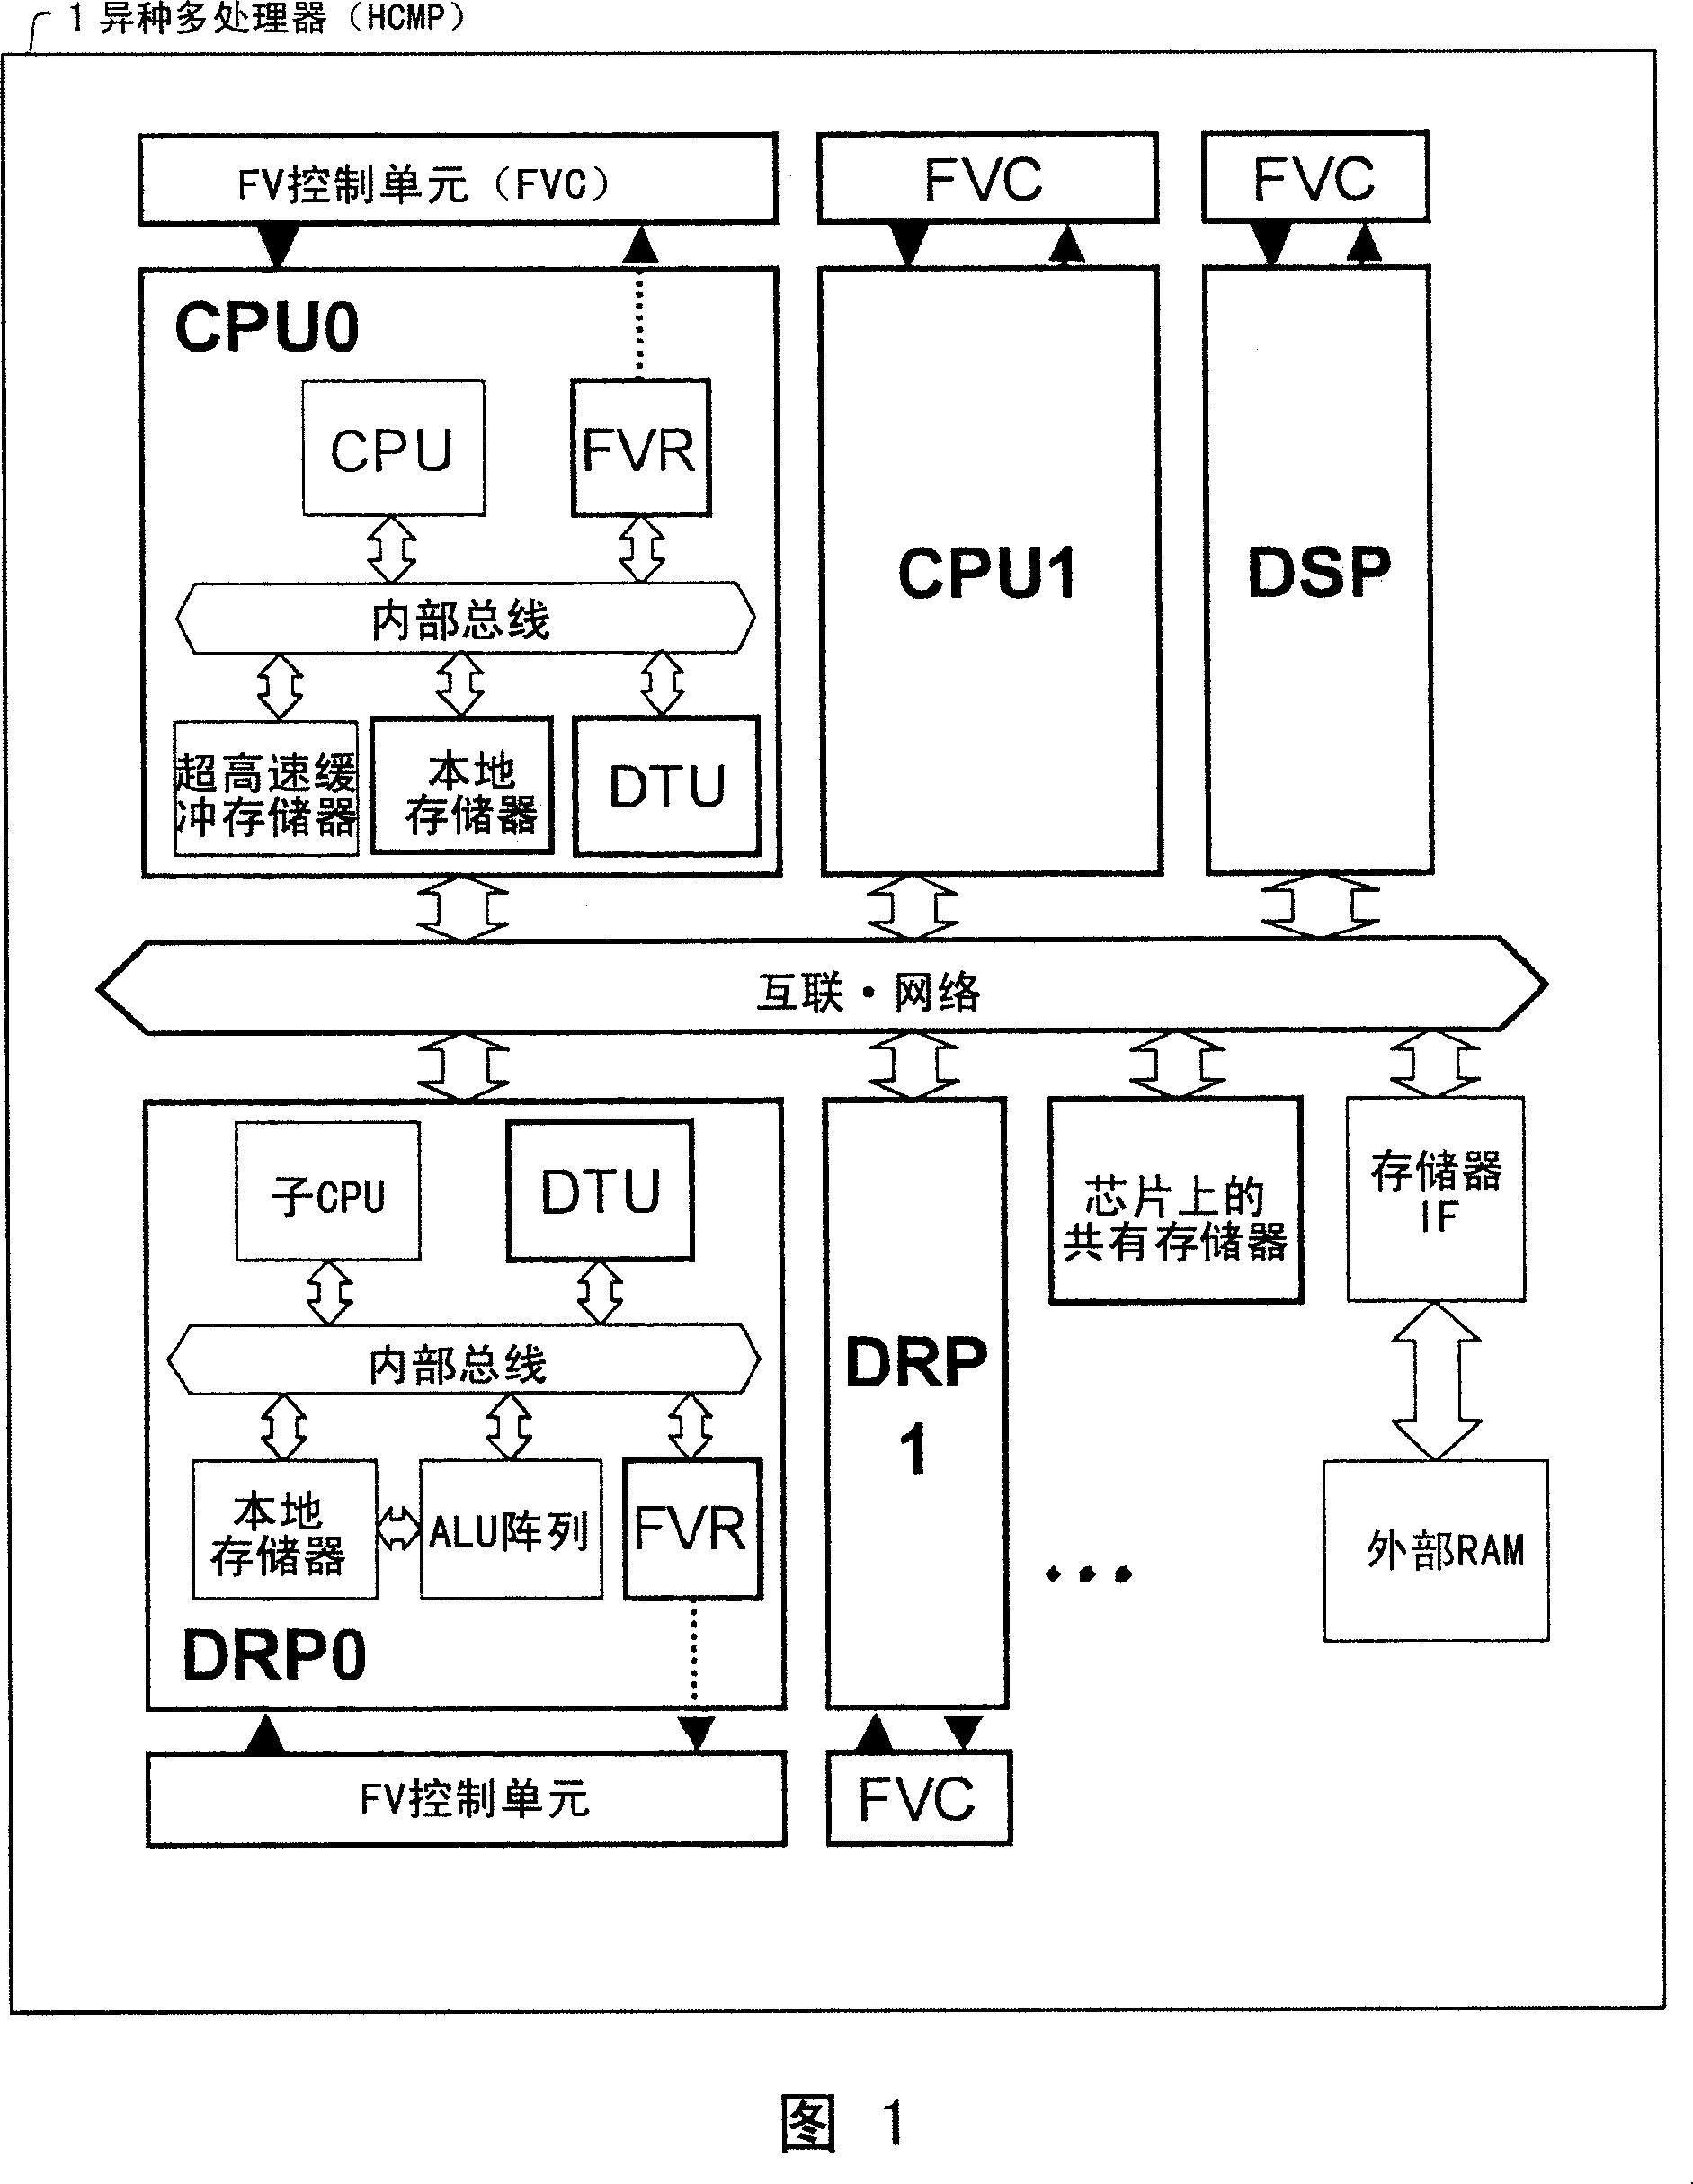 Global compiler for controlling heterogeneous multiprocessor